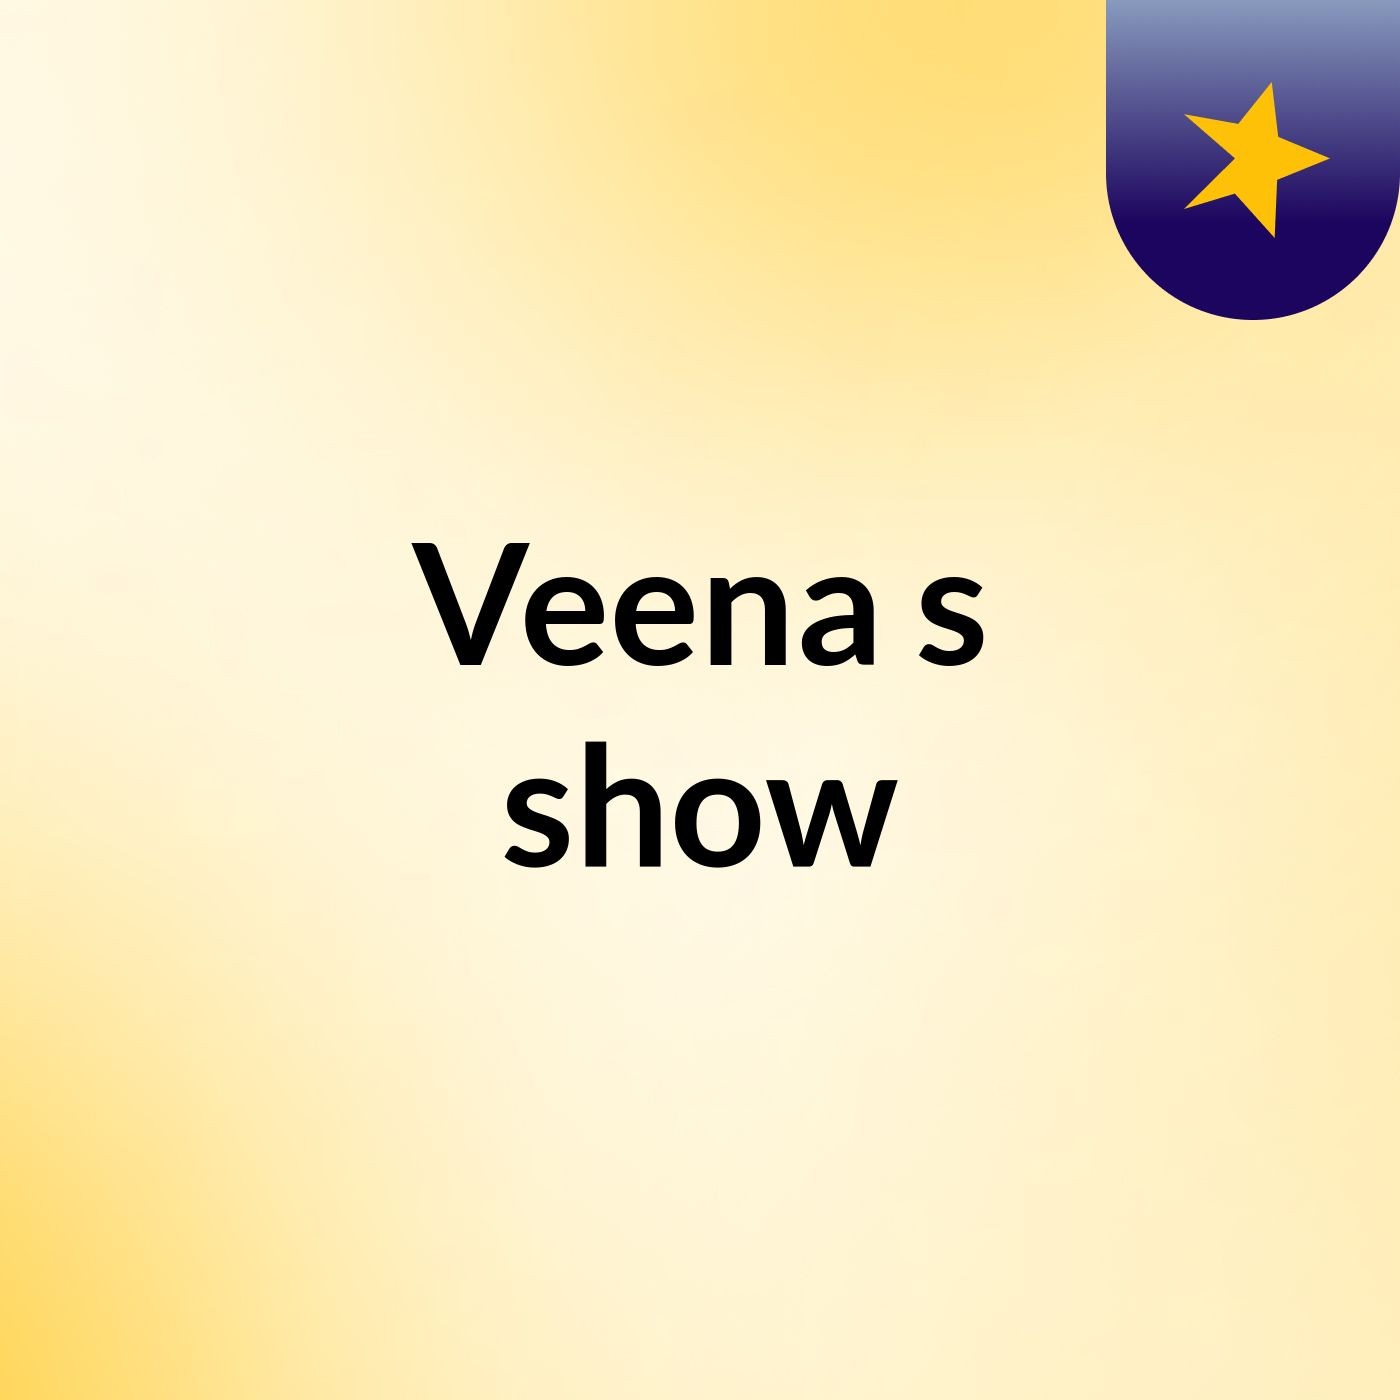 Veena's show